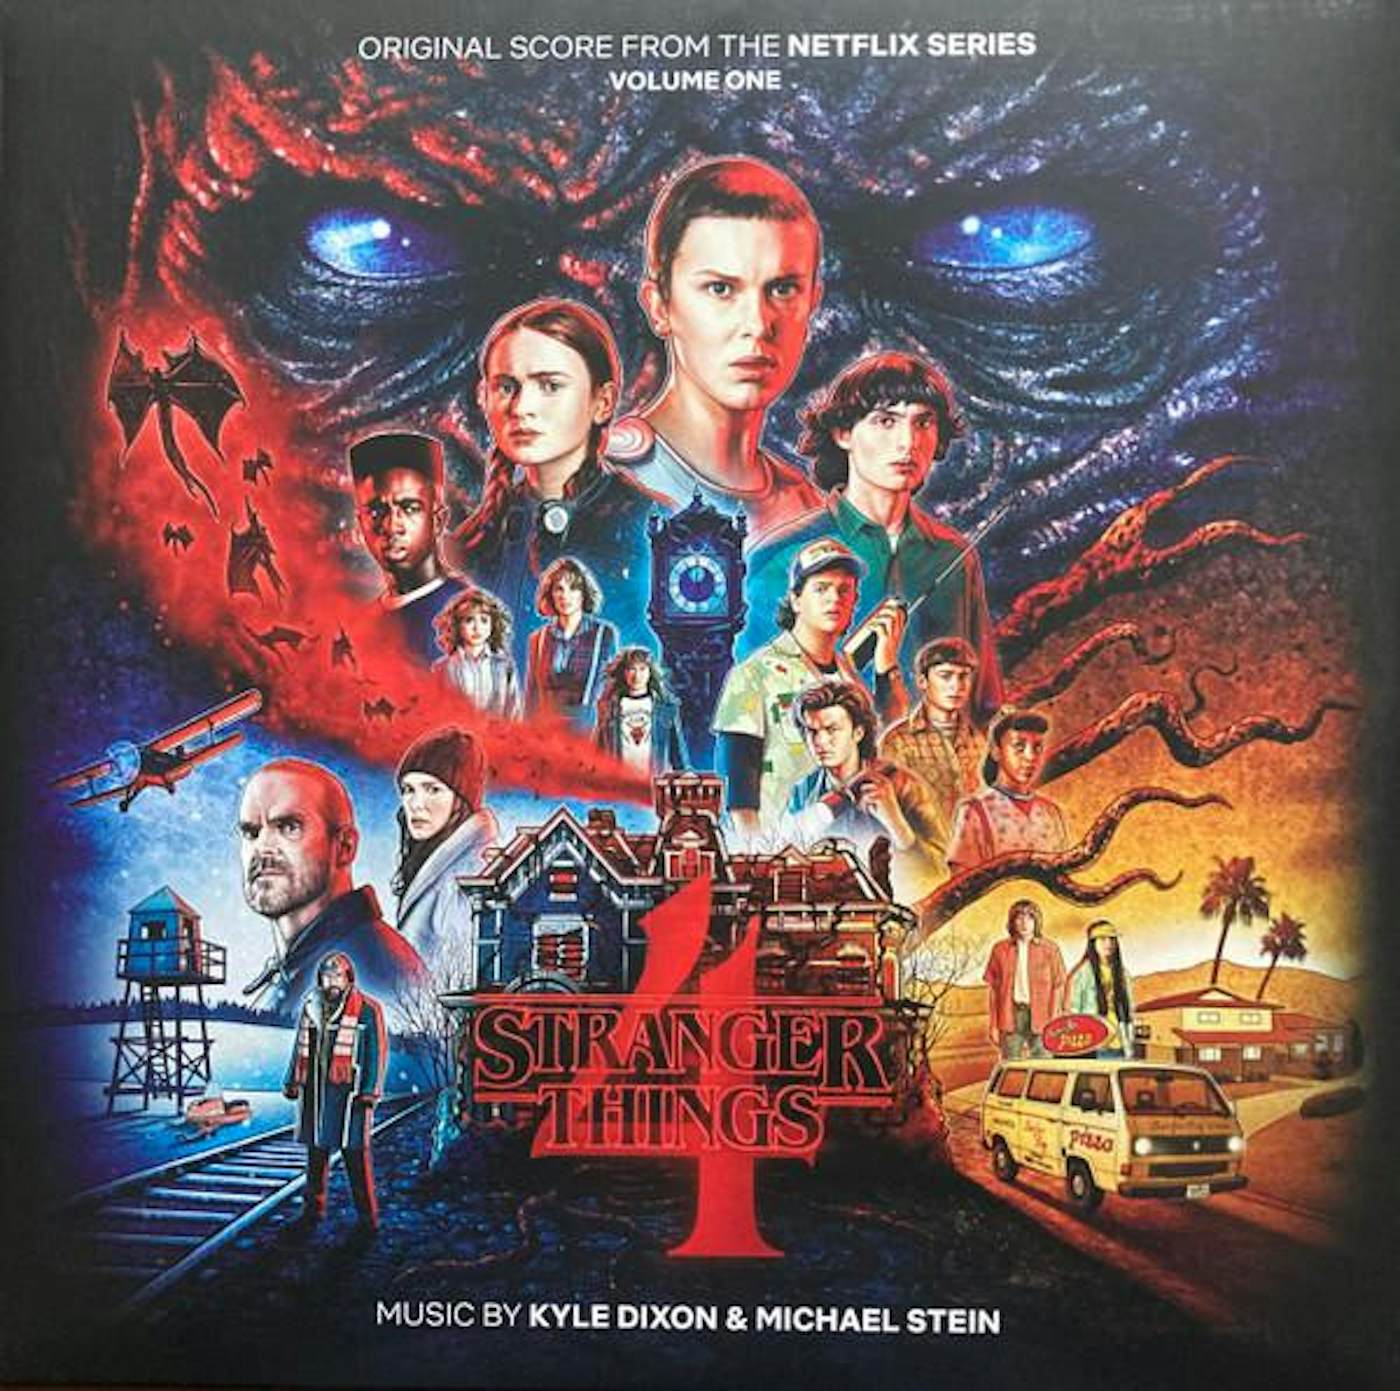 Stranger Things Season 4 Soundtrack 2LP Vinyl  Edition